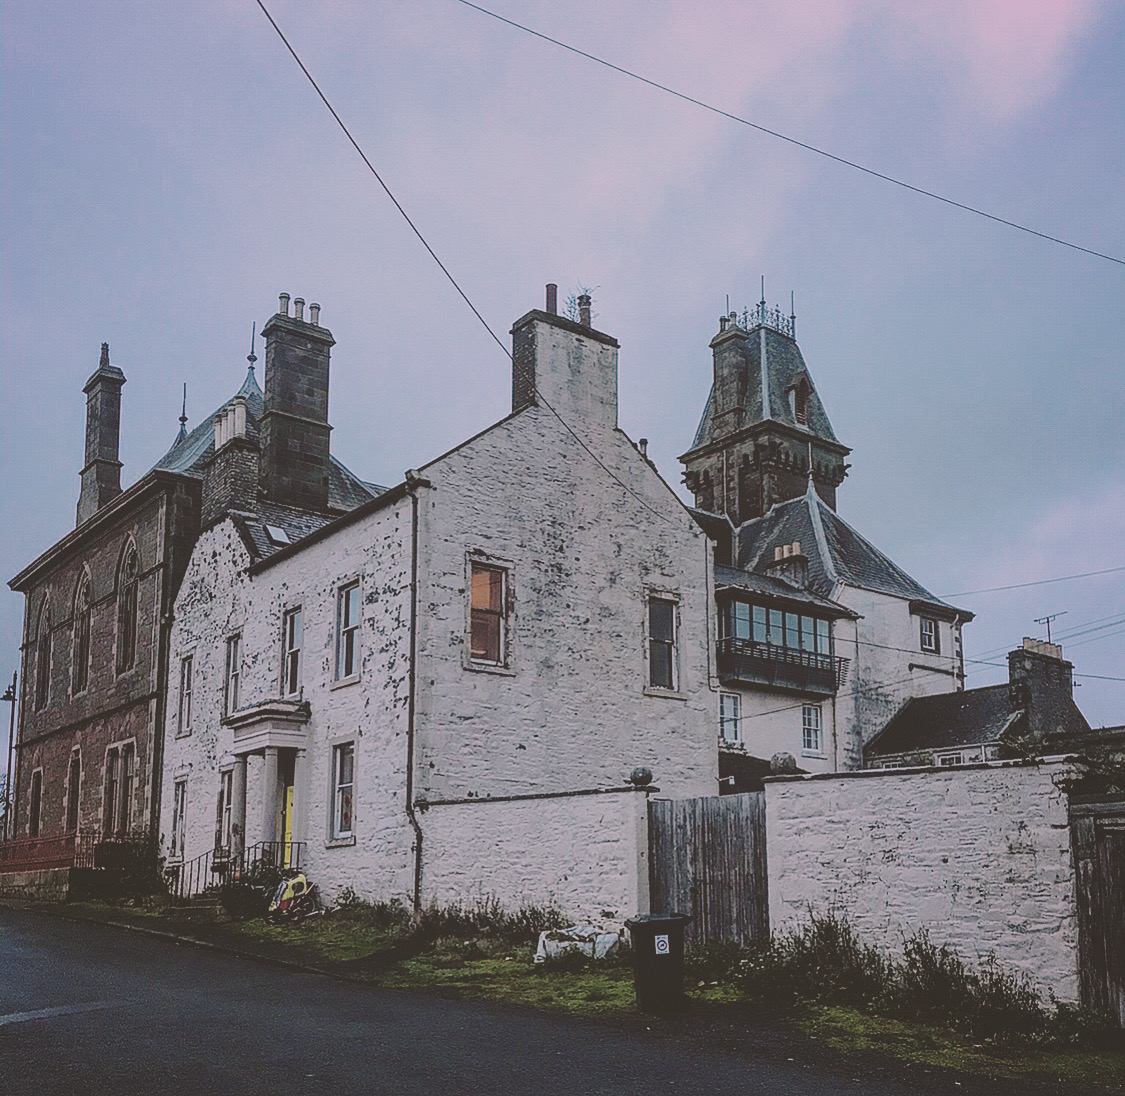 Faded grandeur, still beautiful #wigtown #newtonstewart #dumfriesandgalloway #scottishvillage #ScottishBorders #scottisharchitecture #streetsofscotland #scottishhomes #Scottish #scottishtown